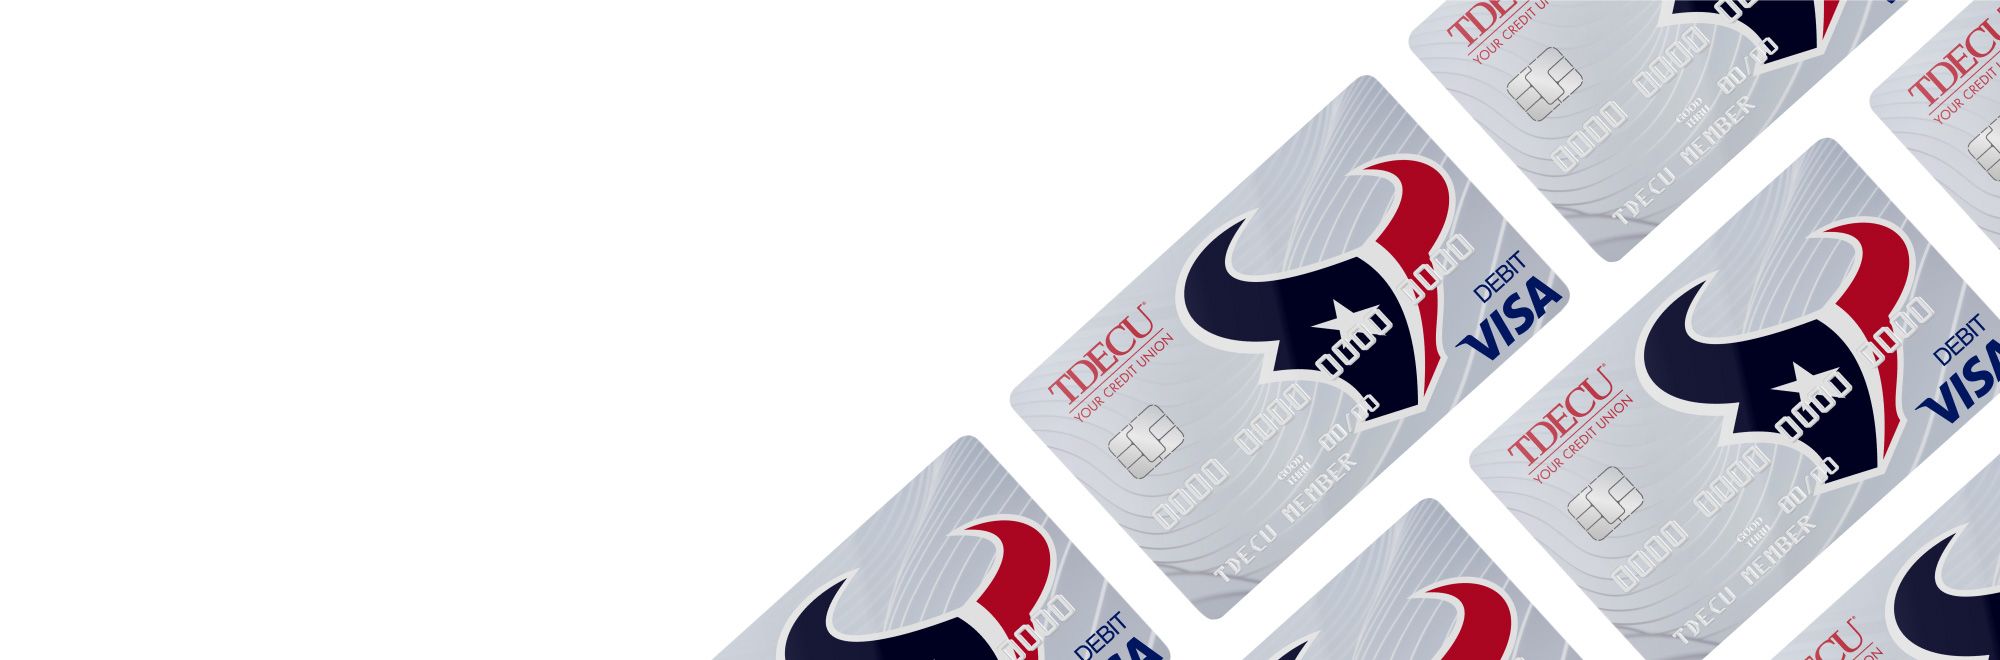 Introducing the Houston Texans Debit Card